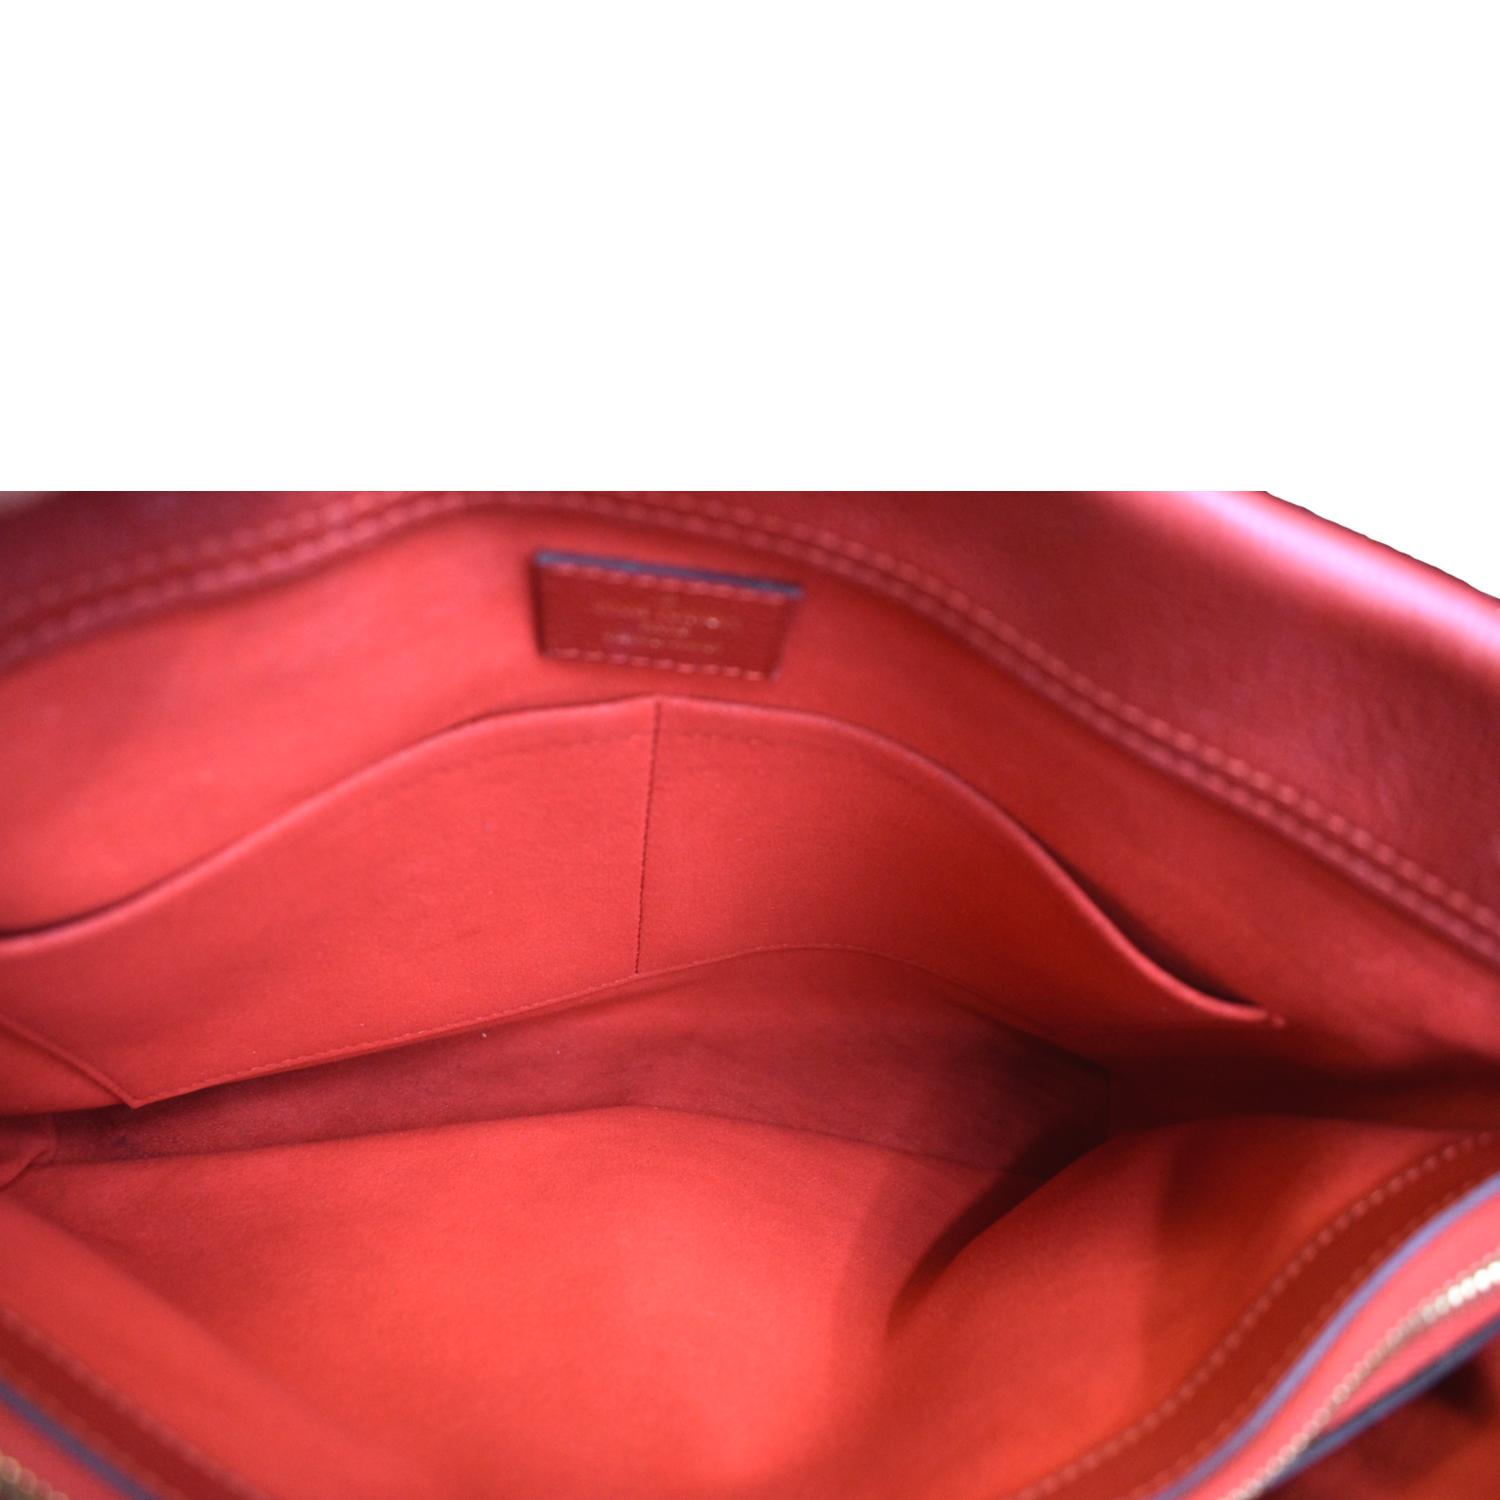 Pallas cloth handbag Louis Vuitton Brown in Cloth - 34133436